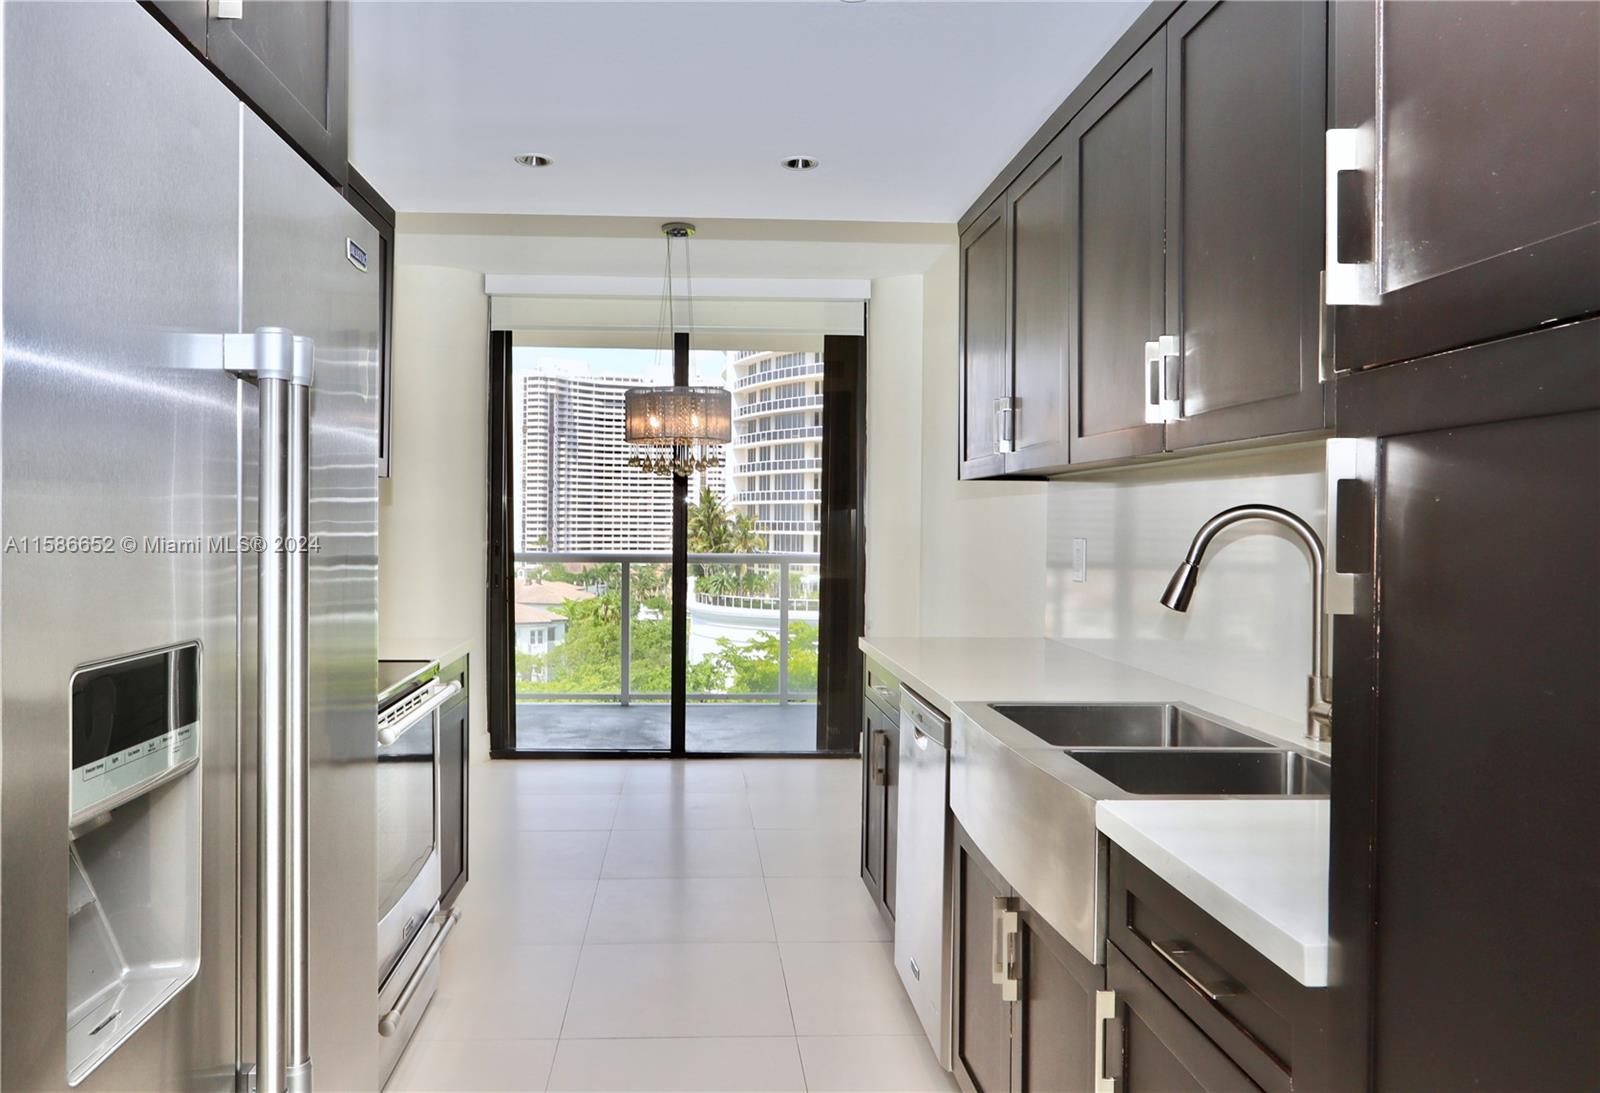 Property for Sale at 4000 Island Bl Blvd 1003, Aventura, Miami-Dade County, Florida - Bedrooms: 2 
Bathrooms: 2  - $689,000